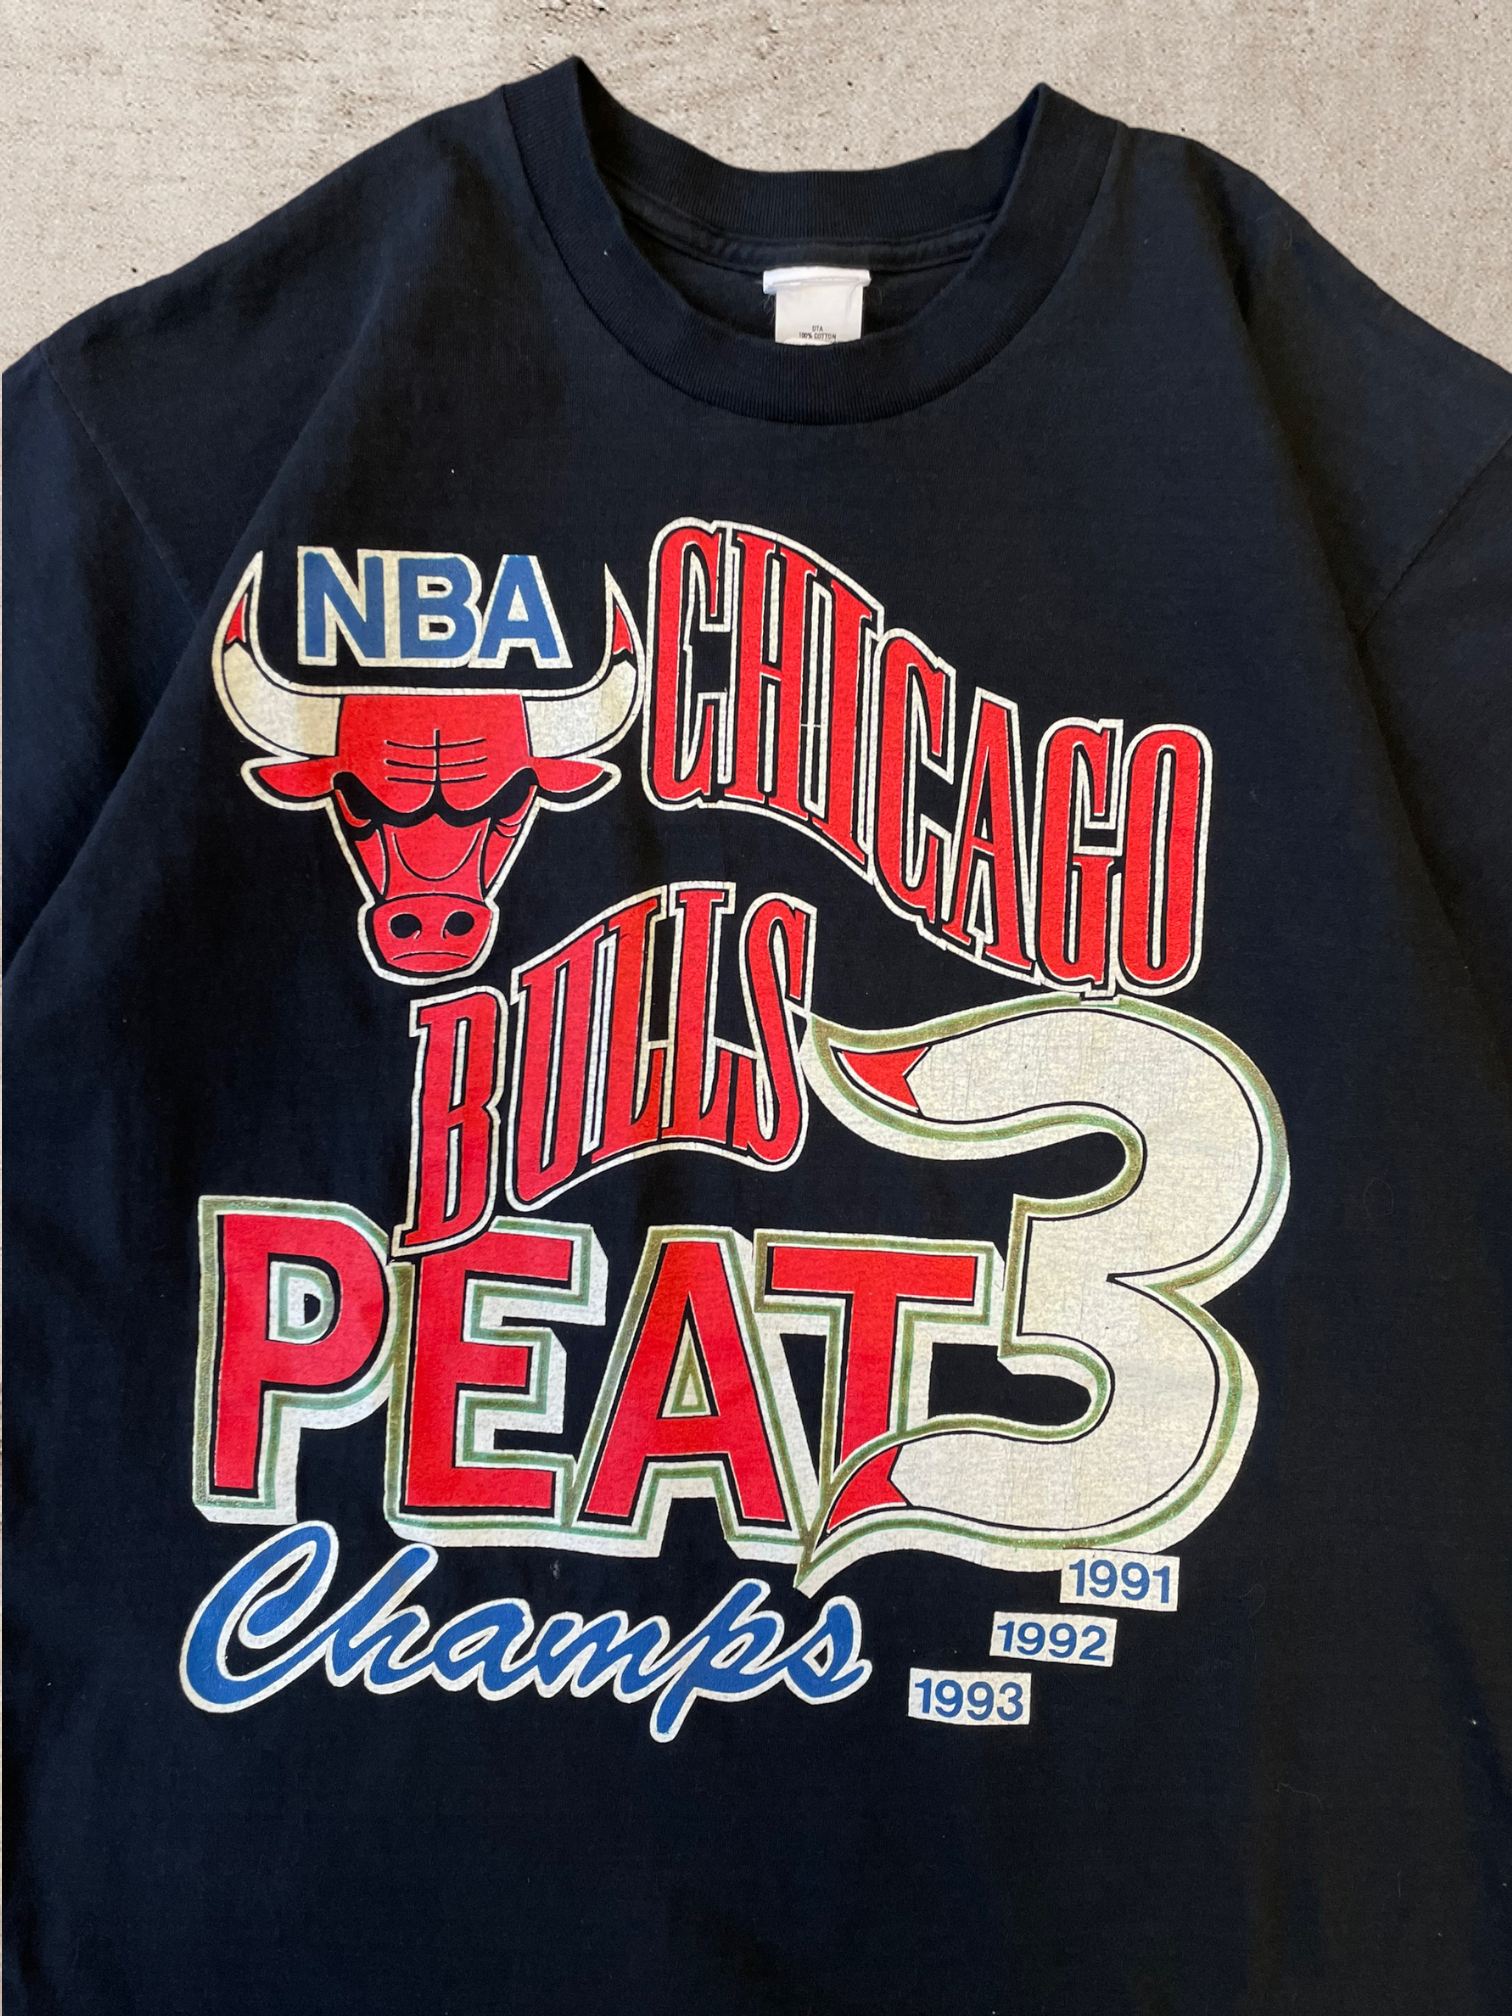 1993 Chicago Bulls 3-Peat T-Shirt - Large